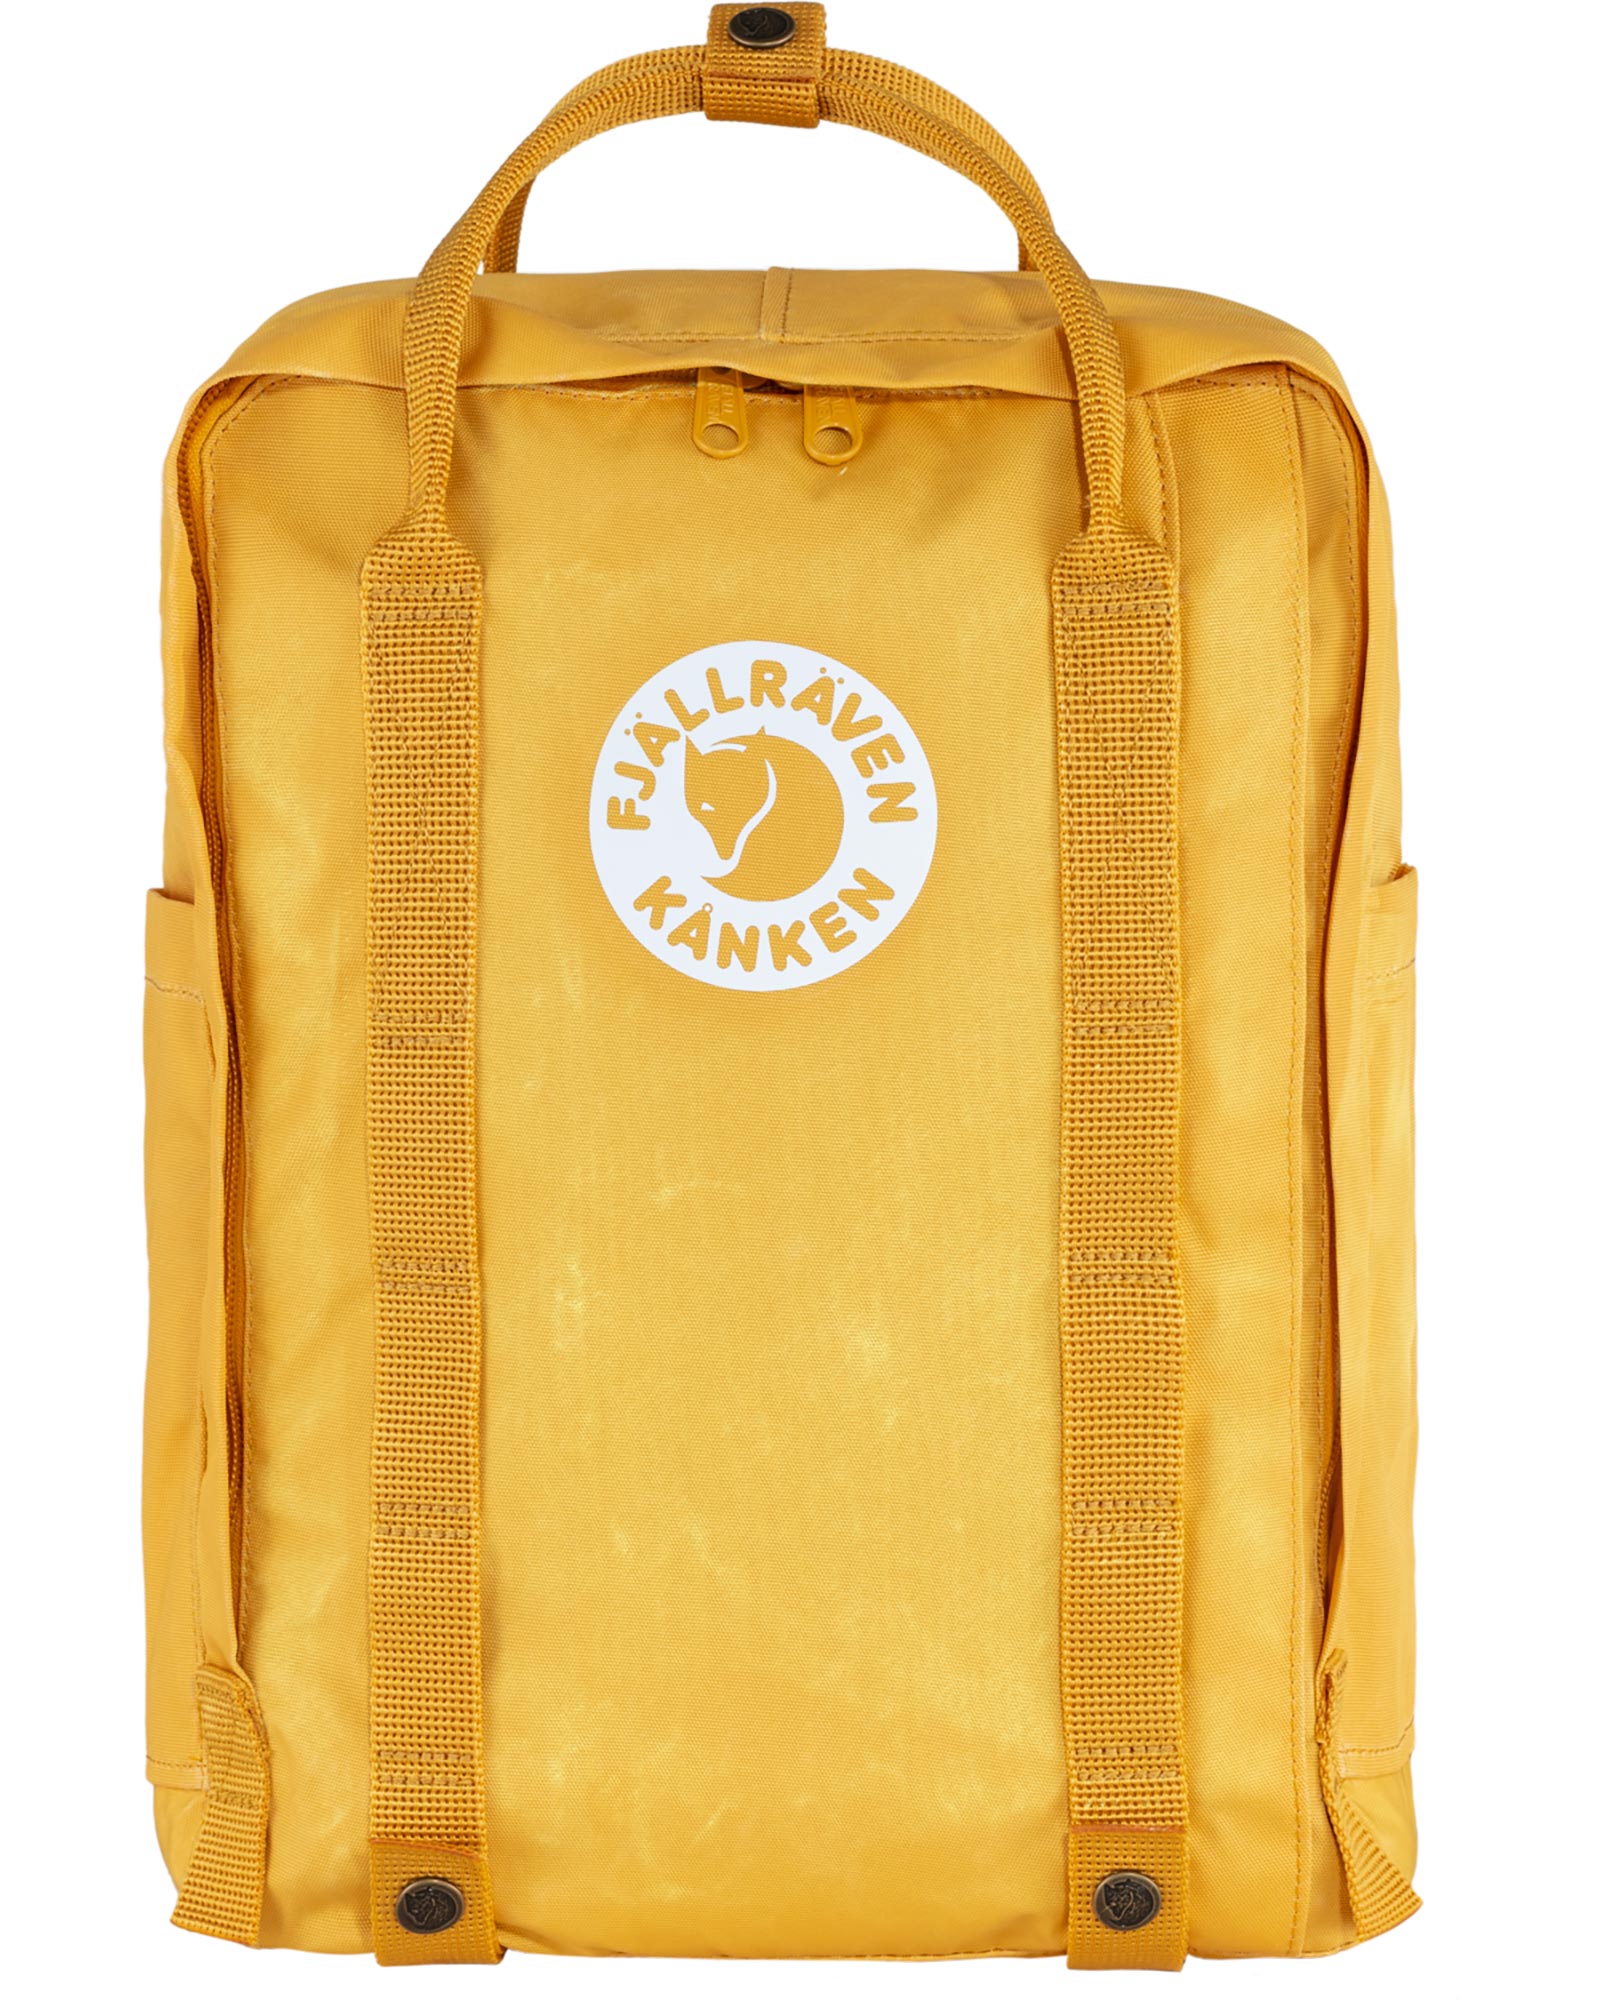 Fjallraven Tree Kanken Backpack - Maple Yellow